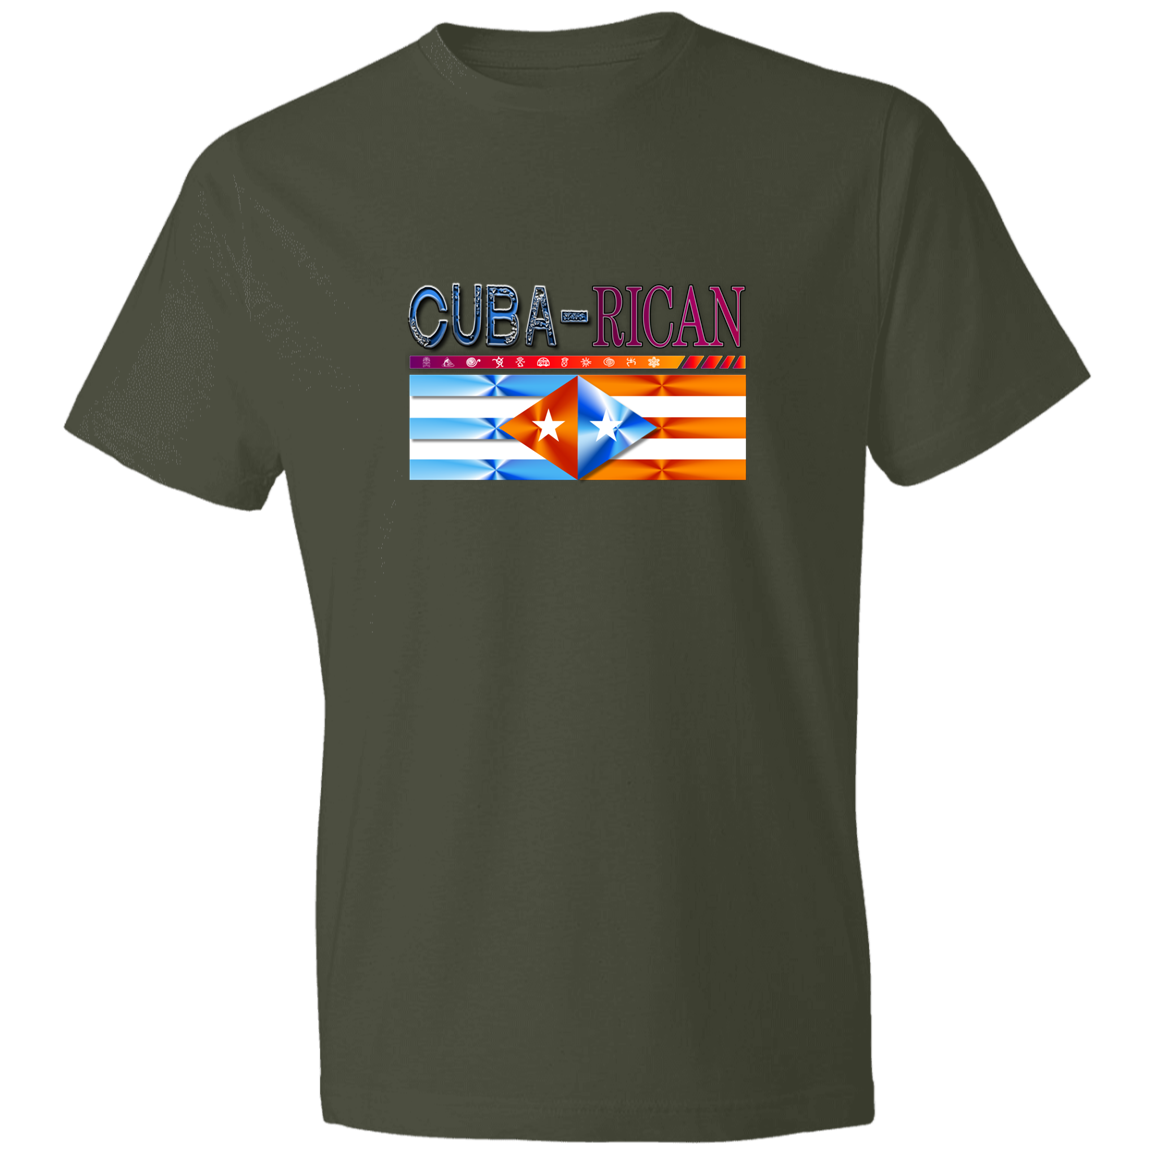 Cuba-Rican Lightweight T-Shirt 4.5 oz - Puerto Rican Pride